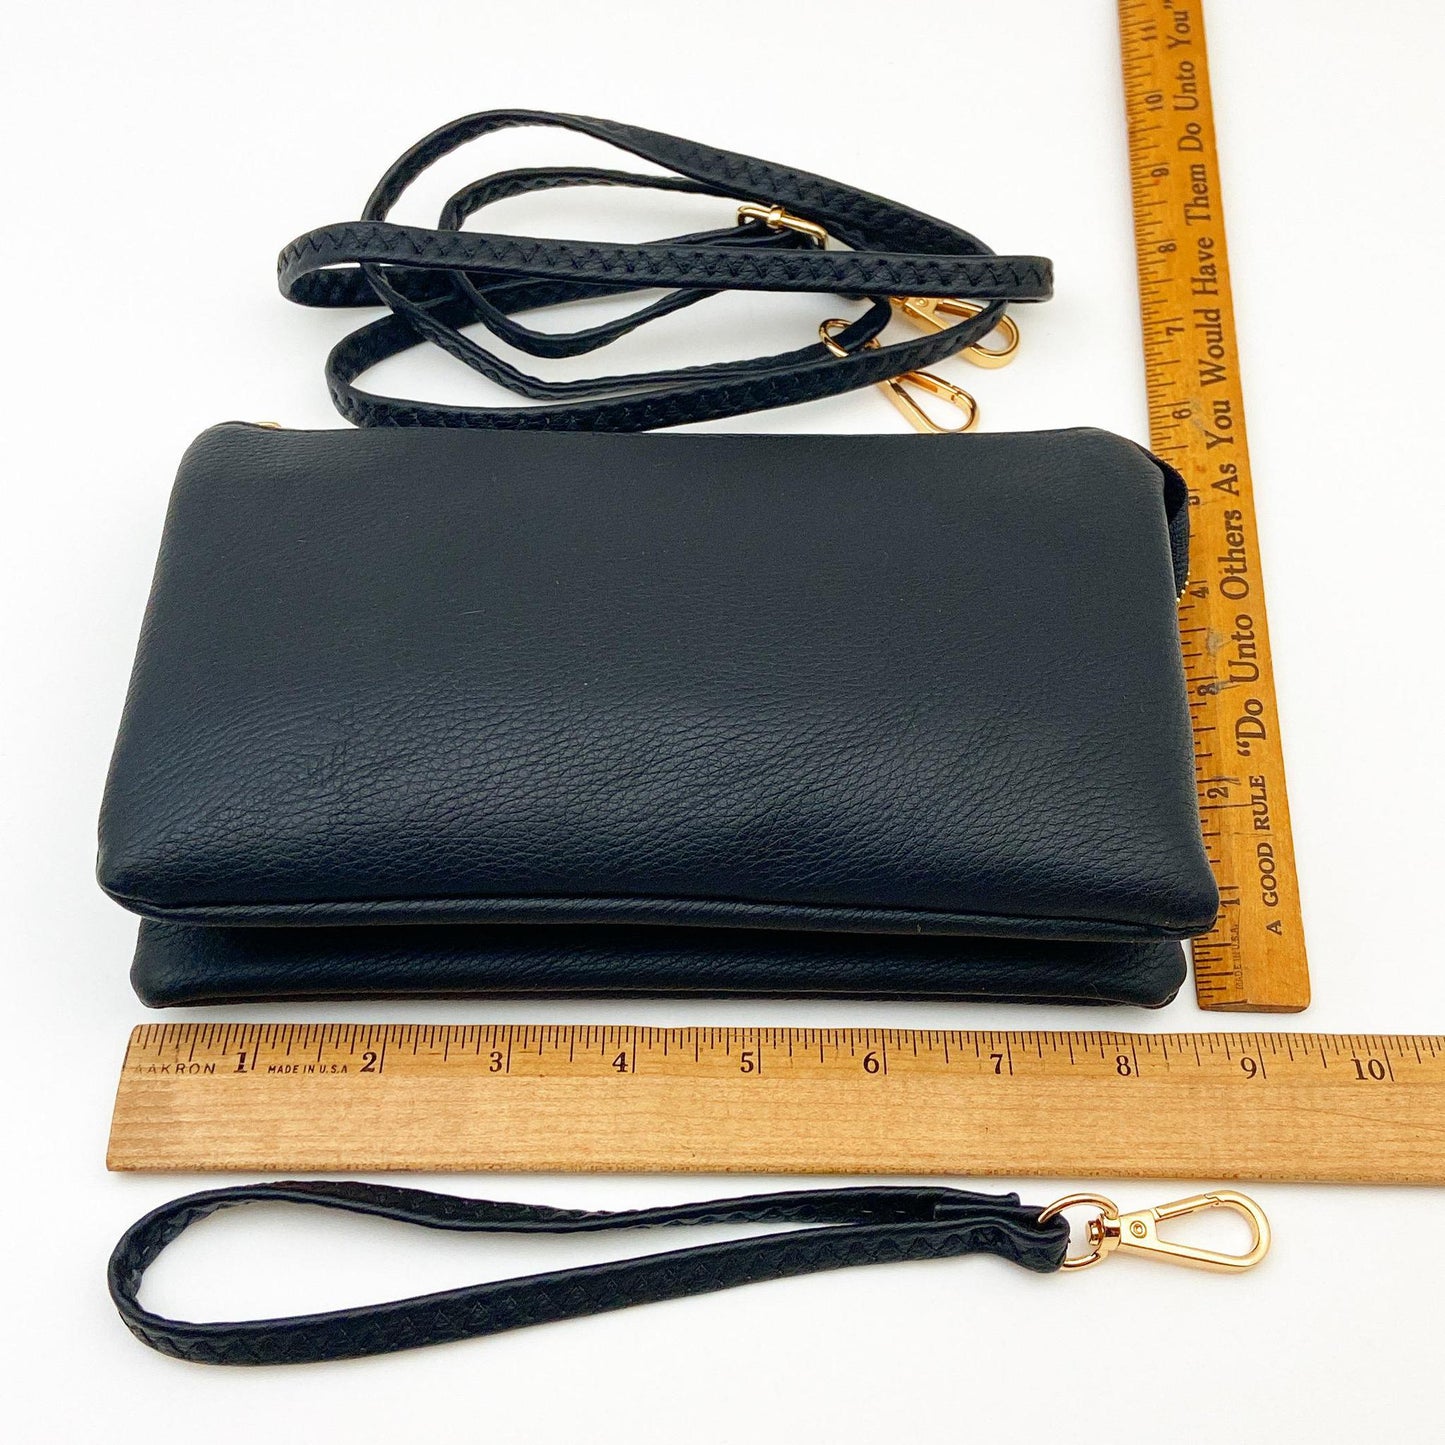 4 in 1 Handbag - Crossbody/Clutch/Wristlet - Charcoal